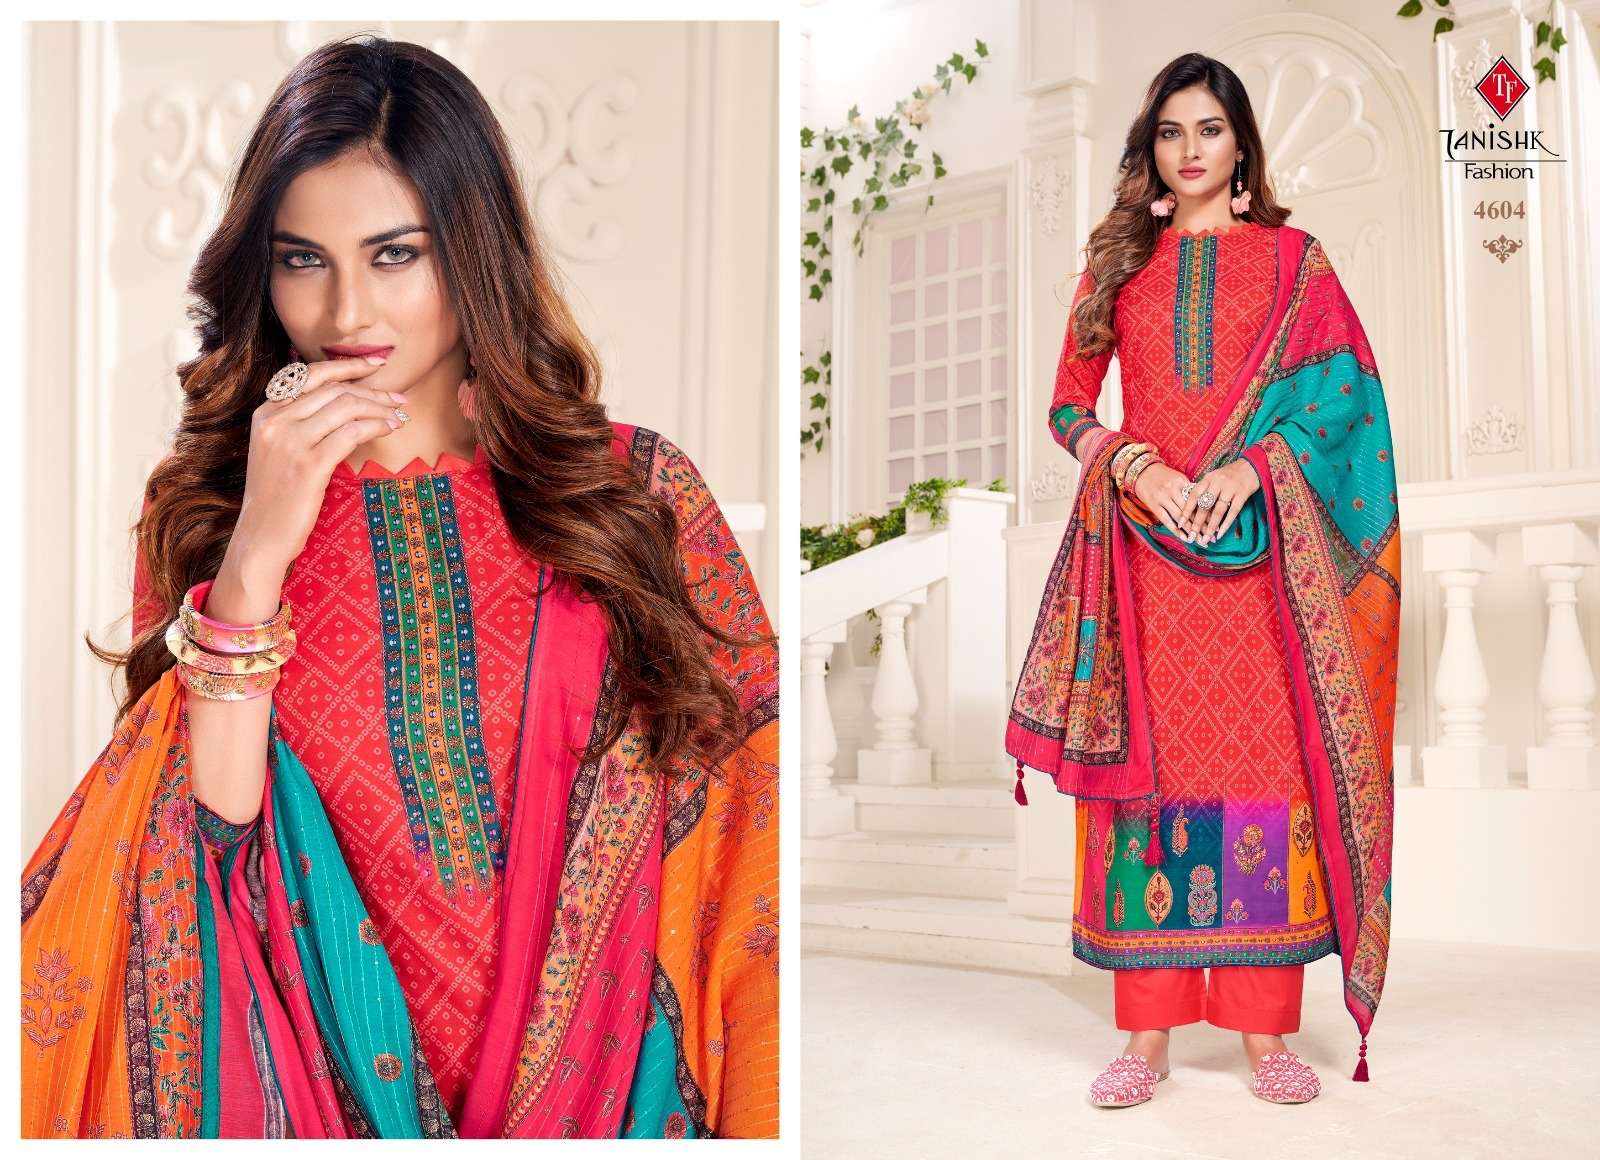 Ek-Punjabi Kudi By Tanishk Fashion 4601 To 4606 Series Beautiful Suits Colorful Stylish Fancy Casual Wear & Ethnic Wear Muslin Digital Print Dresses At Wholesale Price